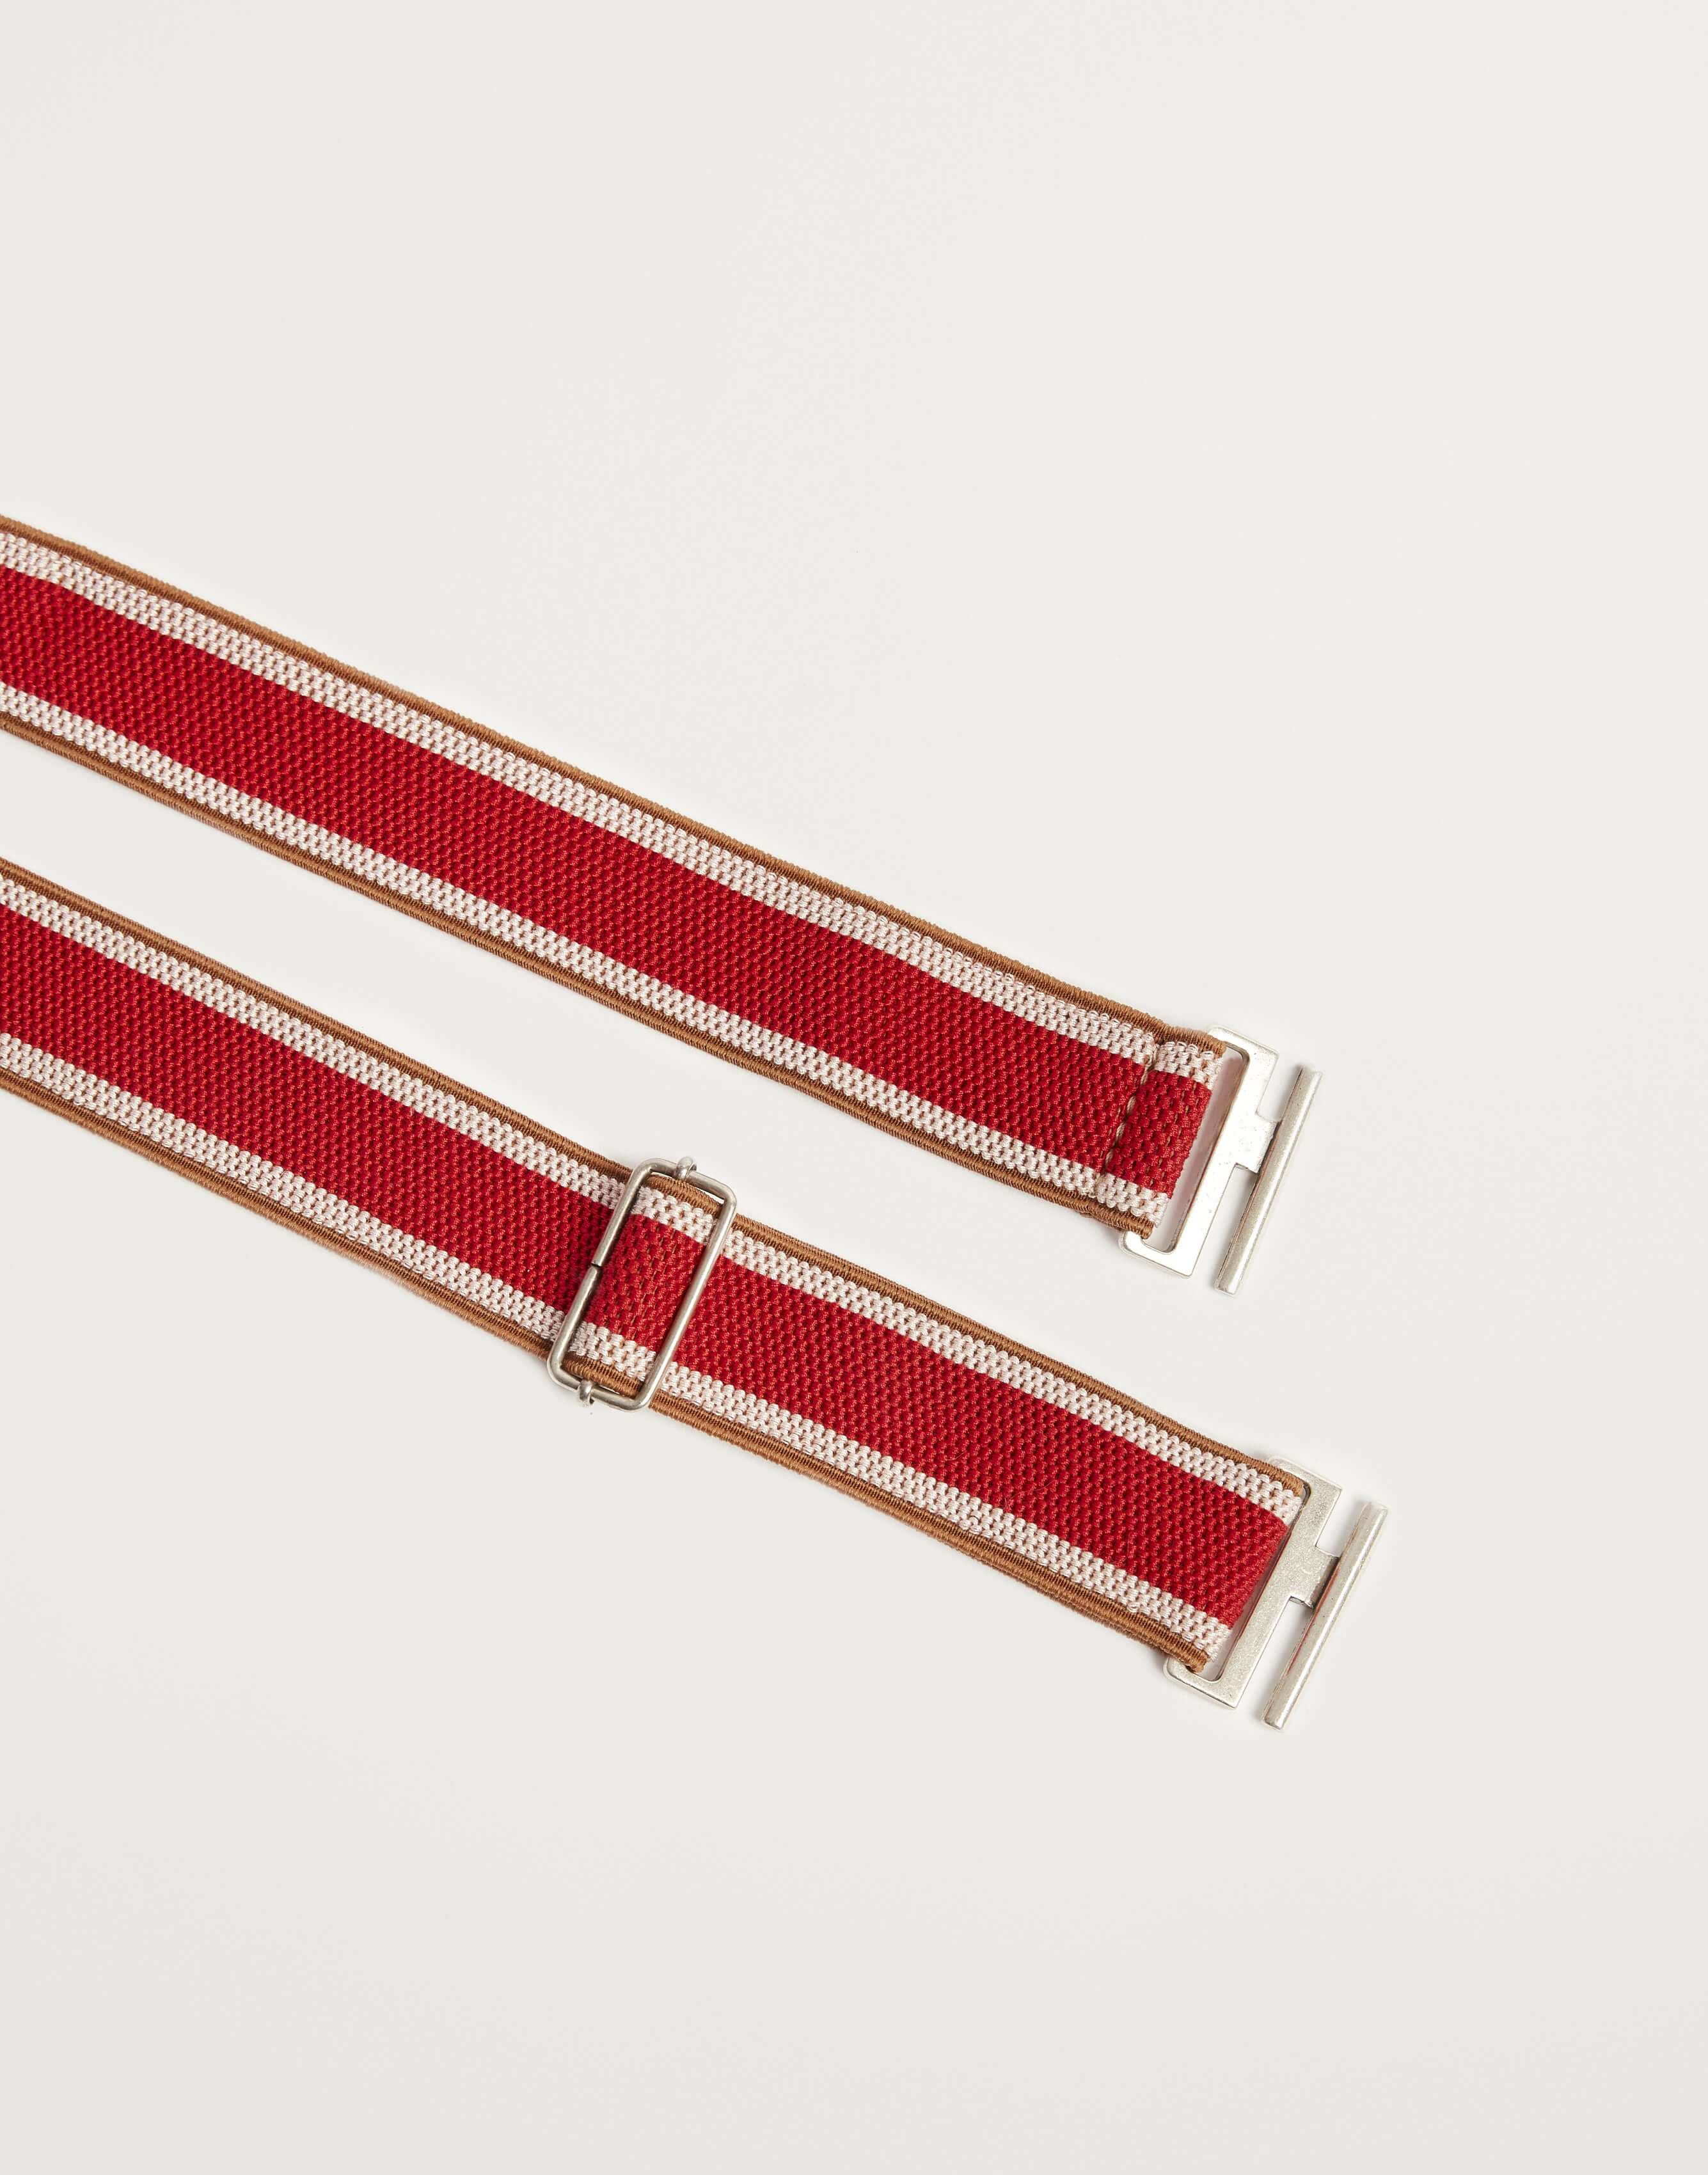 BR Shiba stripe belt in red